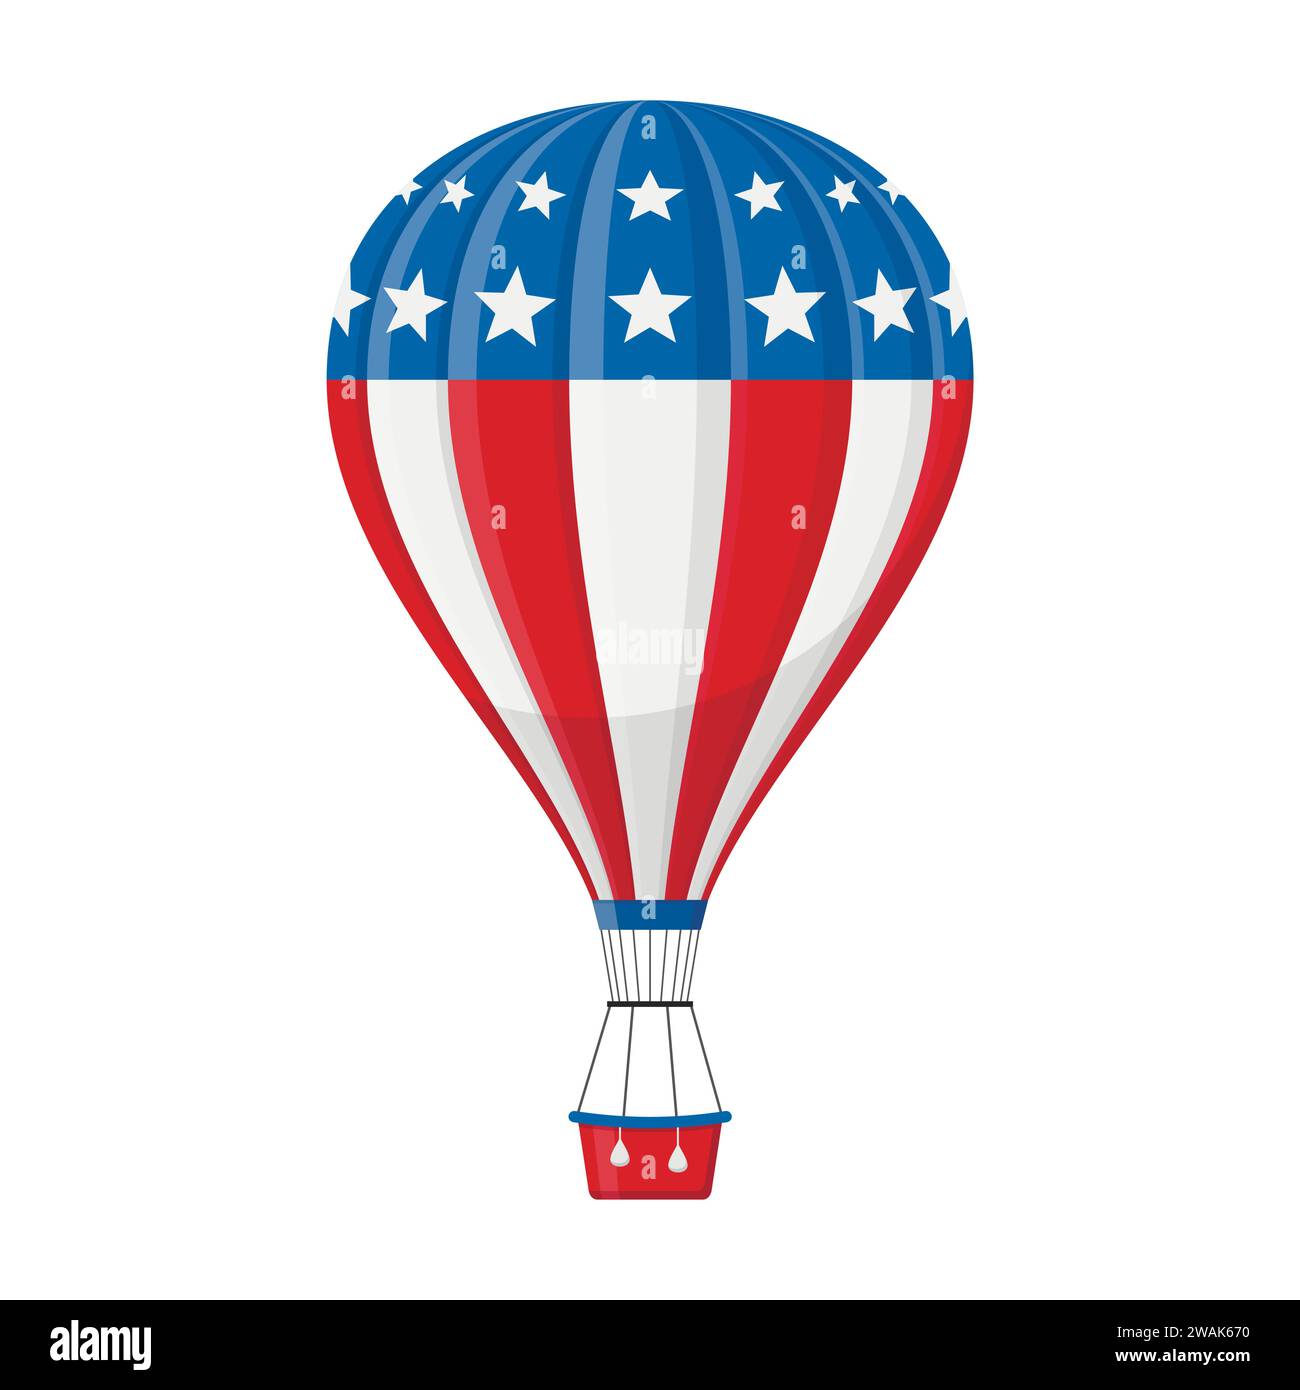 Aerostat Ballon usa Flaggentransport mit Korb-Symbol isoliert auf weißem Hintergrund, Cartoon american Ballonfahrt Abenteuer Flug, Ballonreisen f Stock Vektor